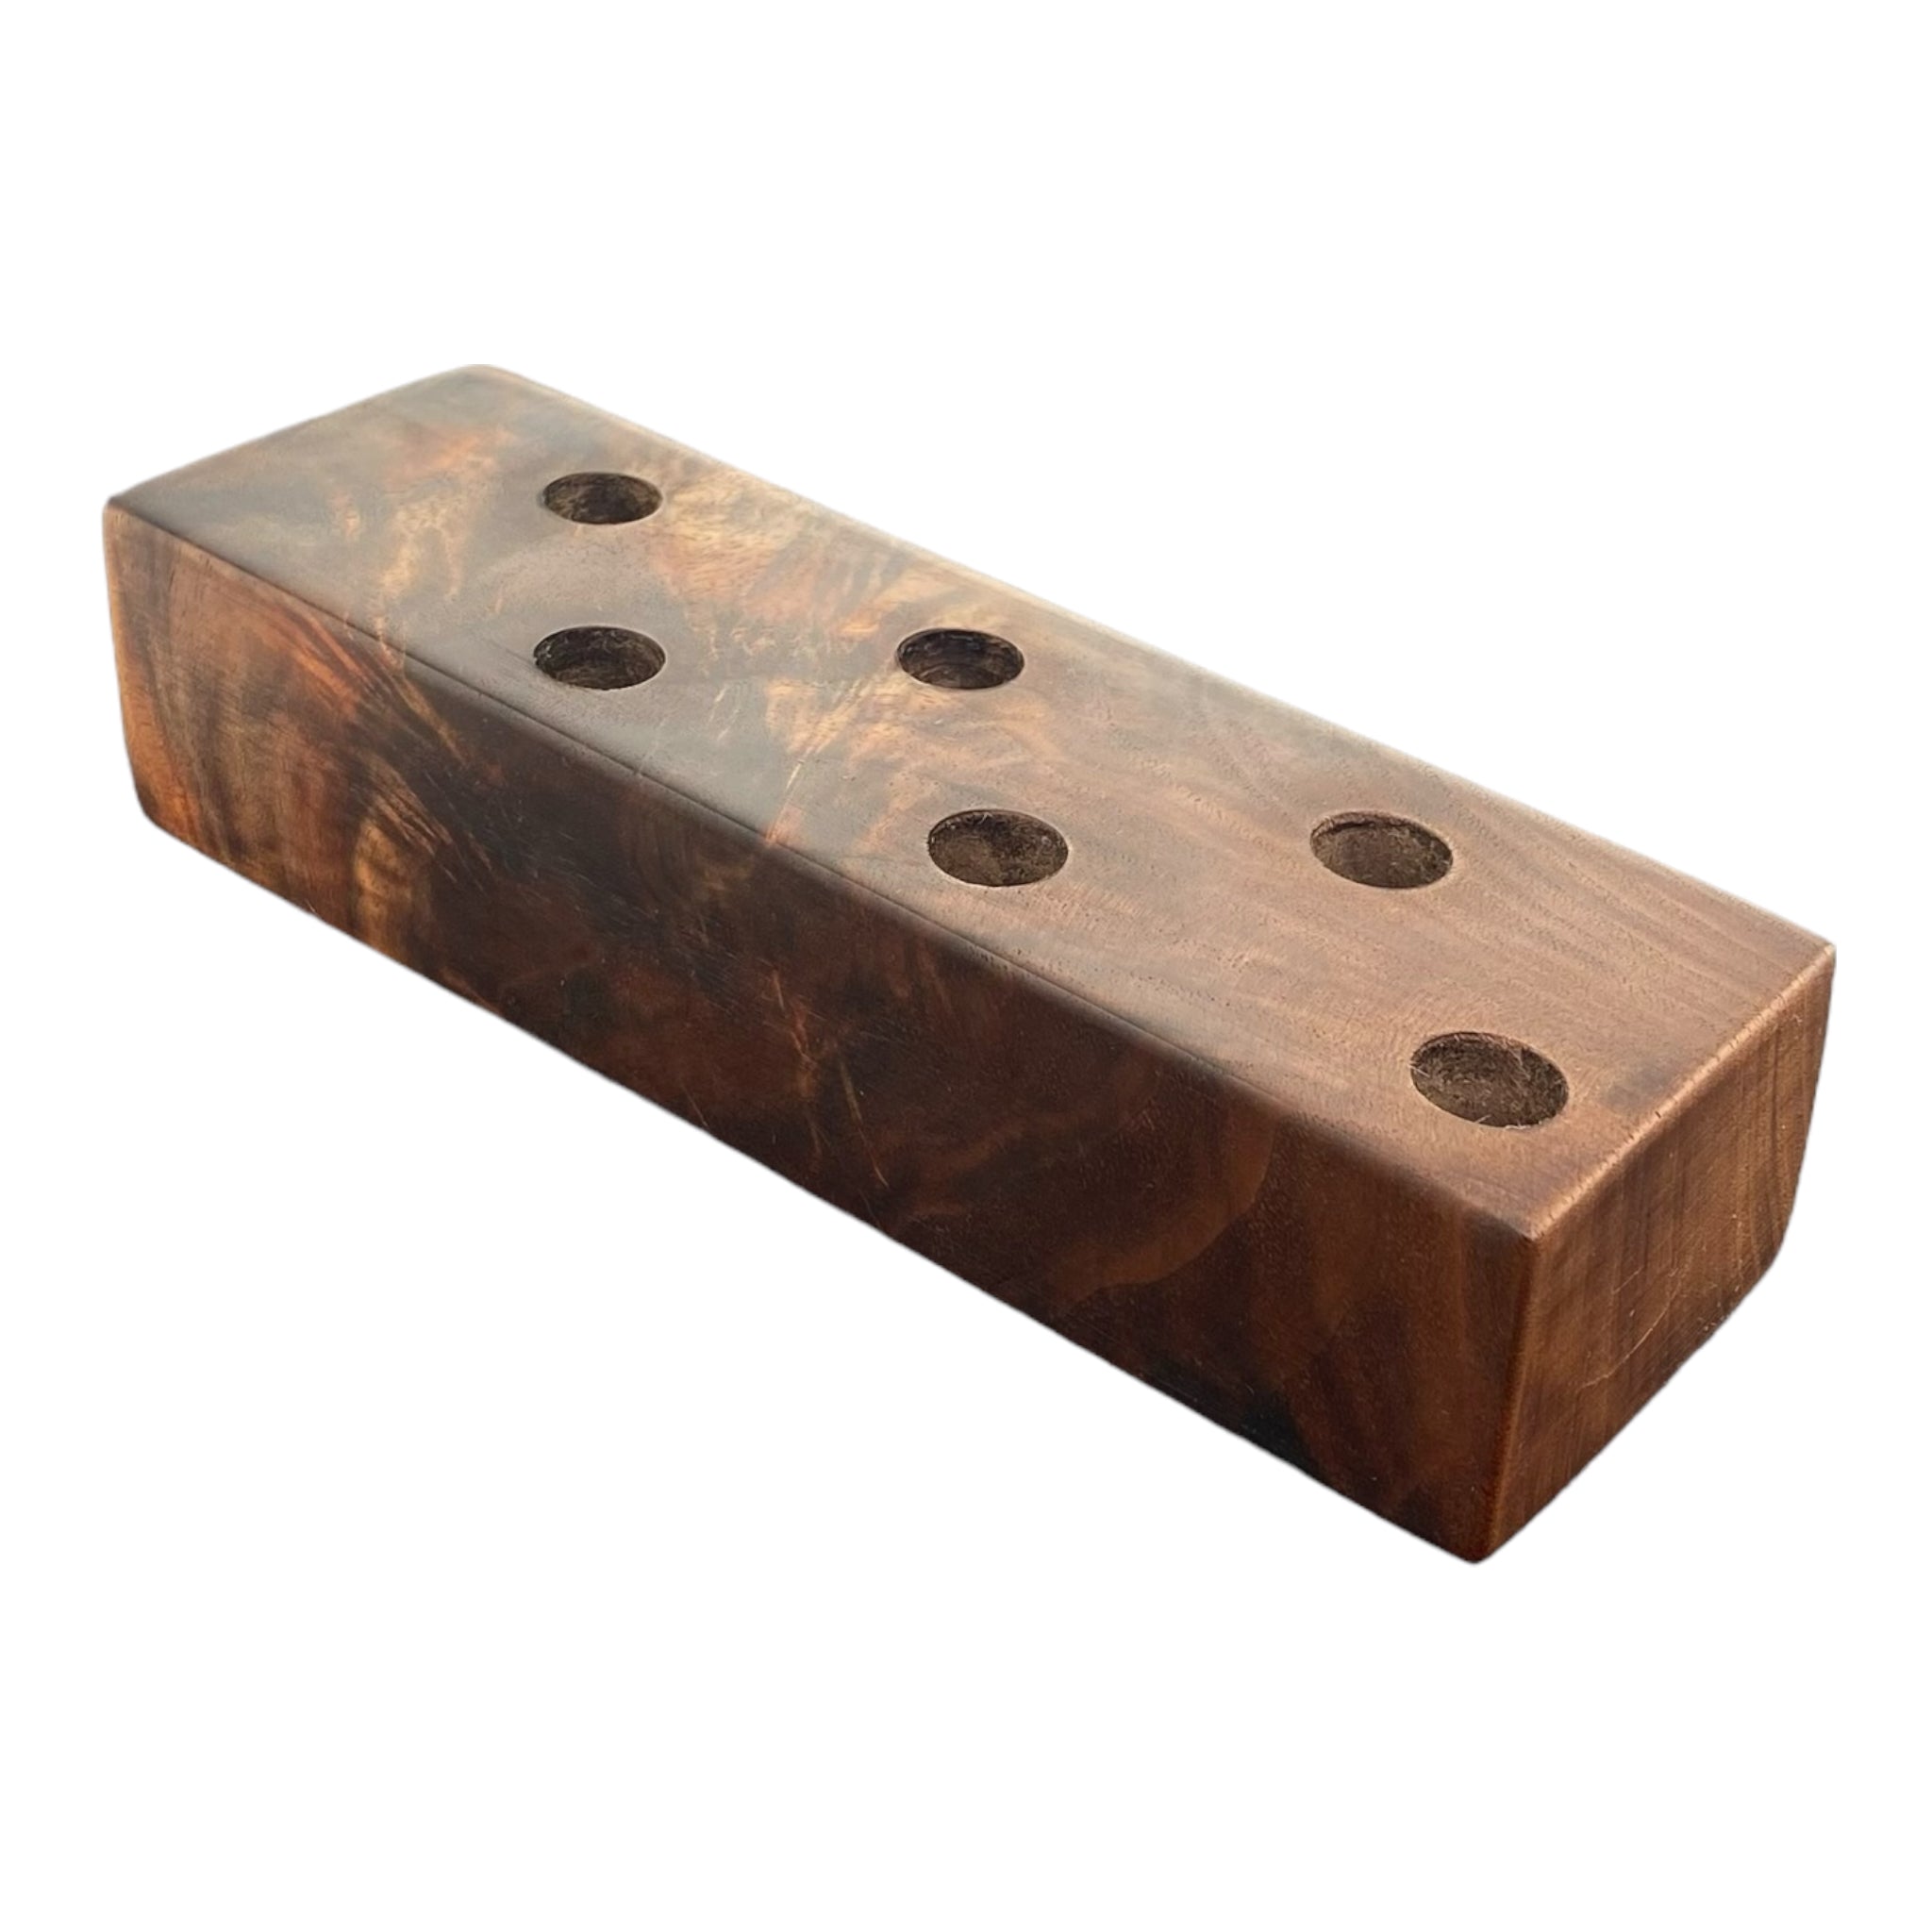 6 Hole Wood Display Stand Holder For 14mm Bong Bowl Pieces Or Quartz Bangers - Black Walnut Burl